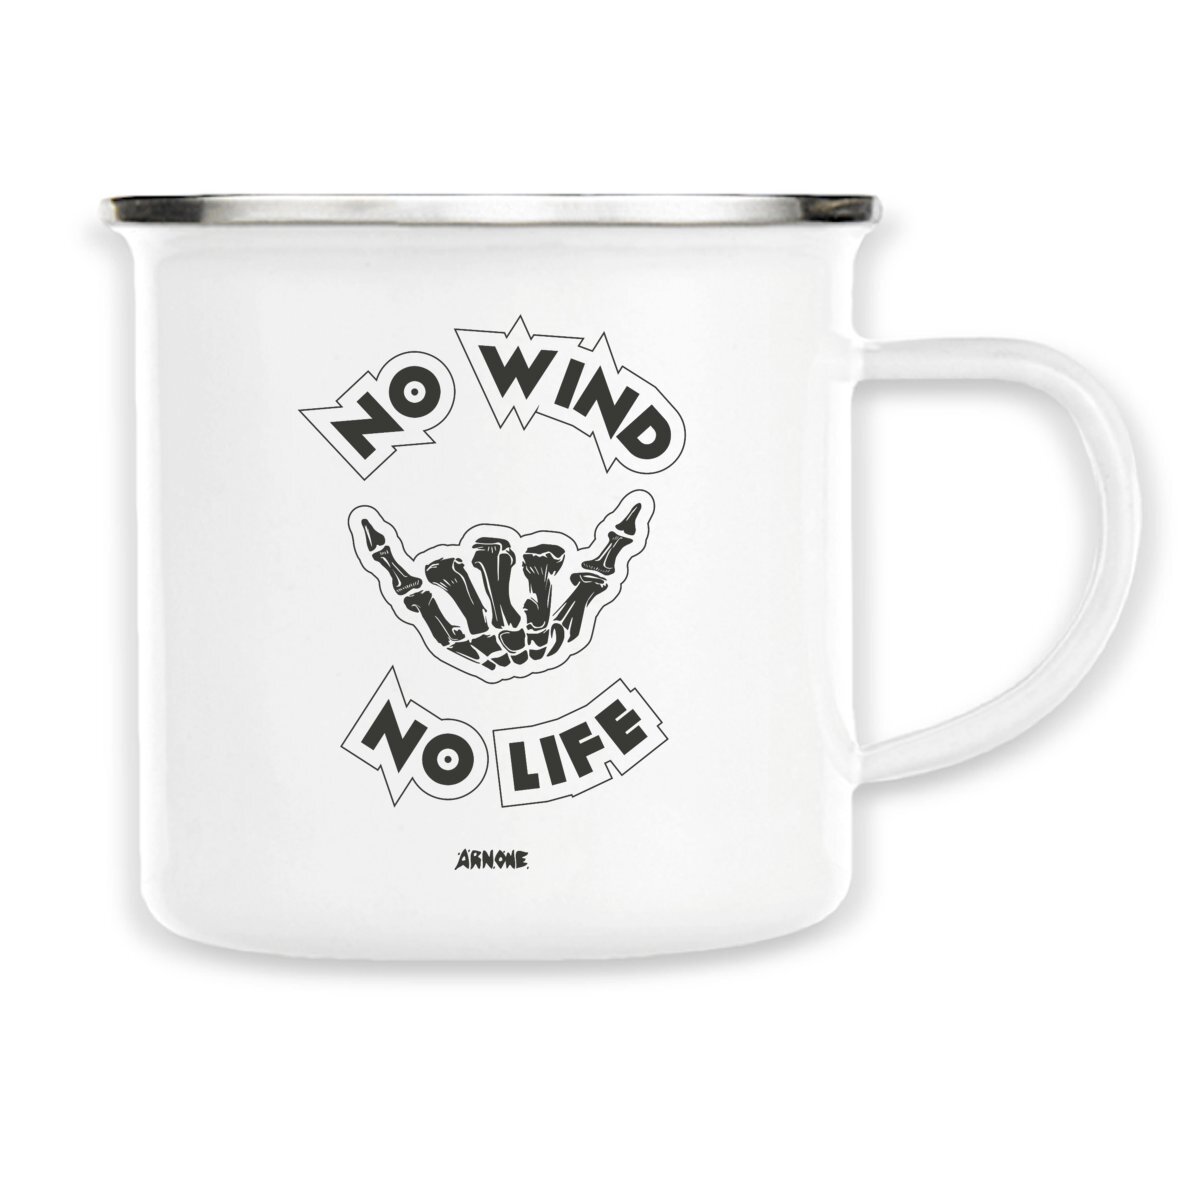 No WIND NO LIFE mug